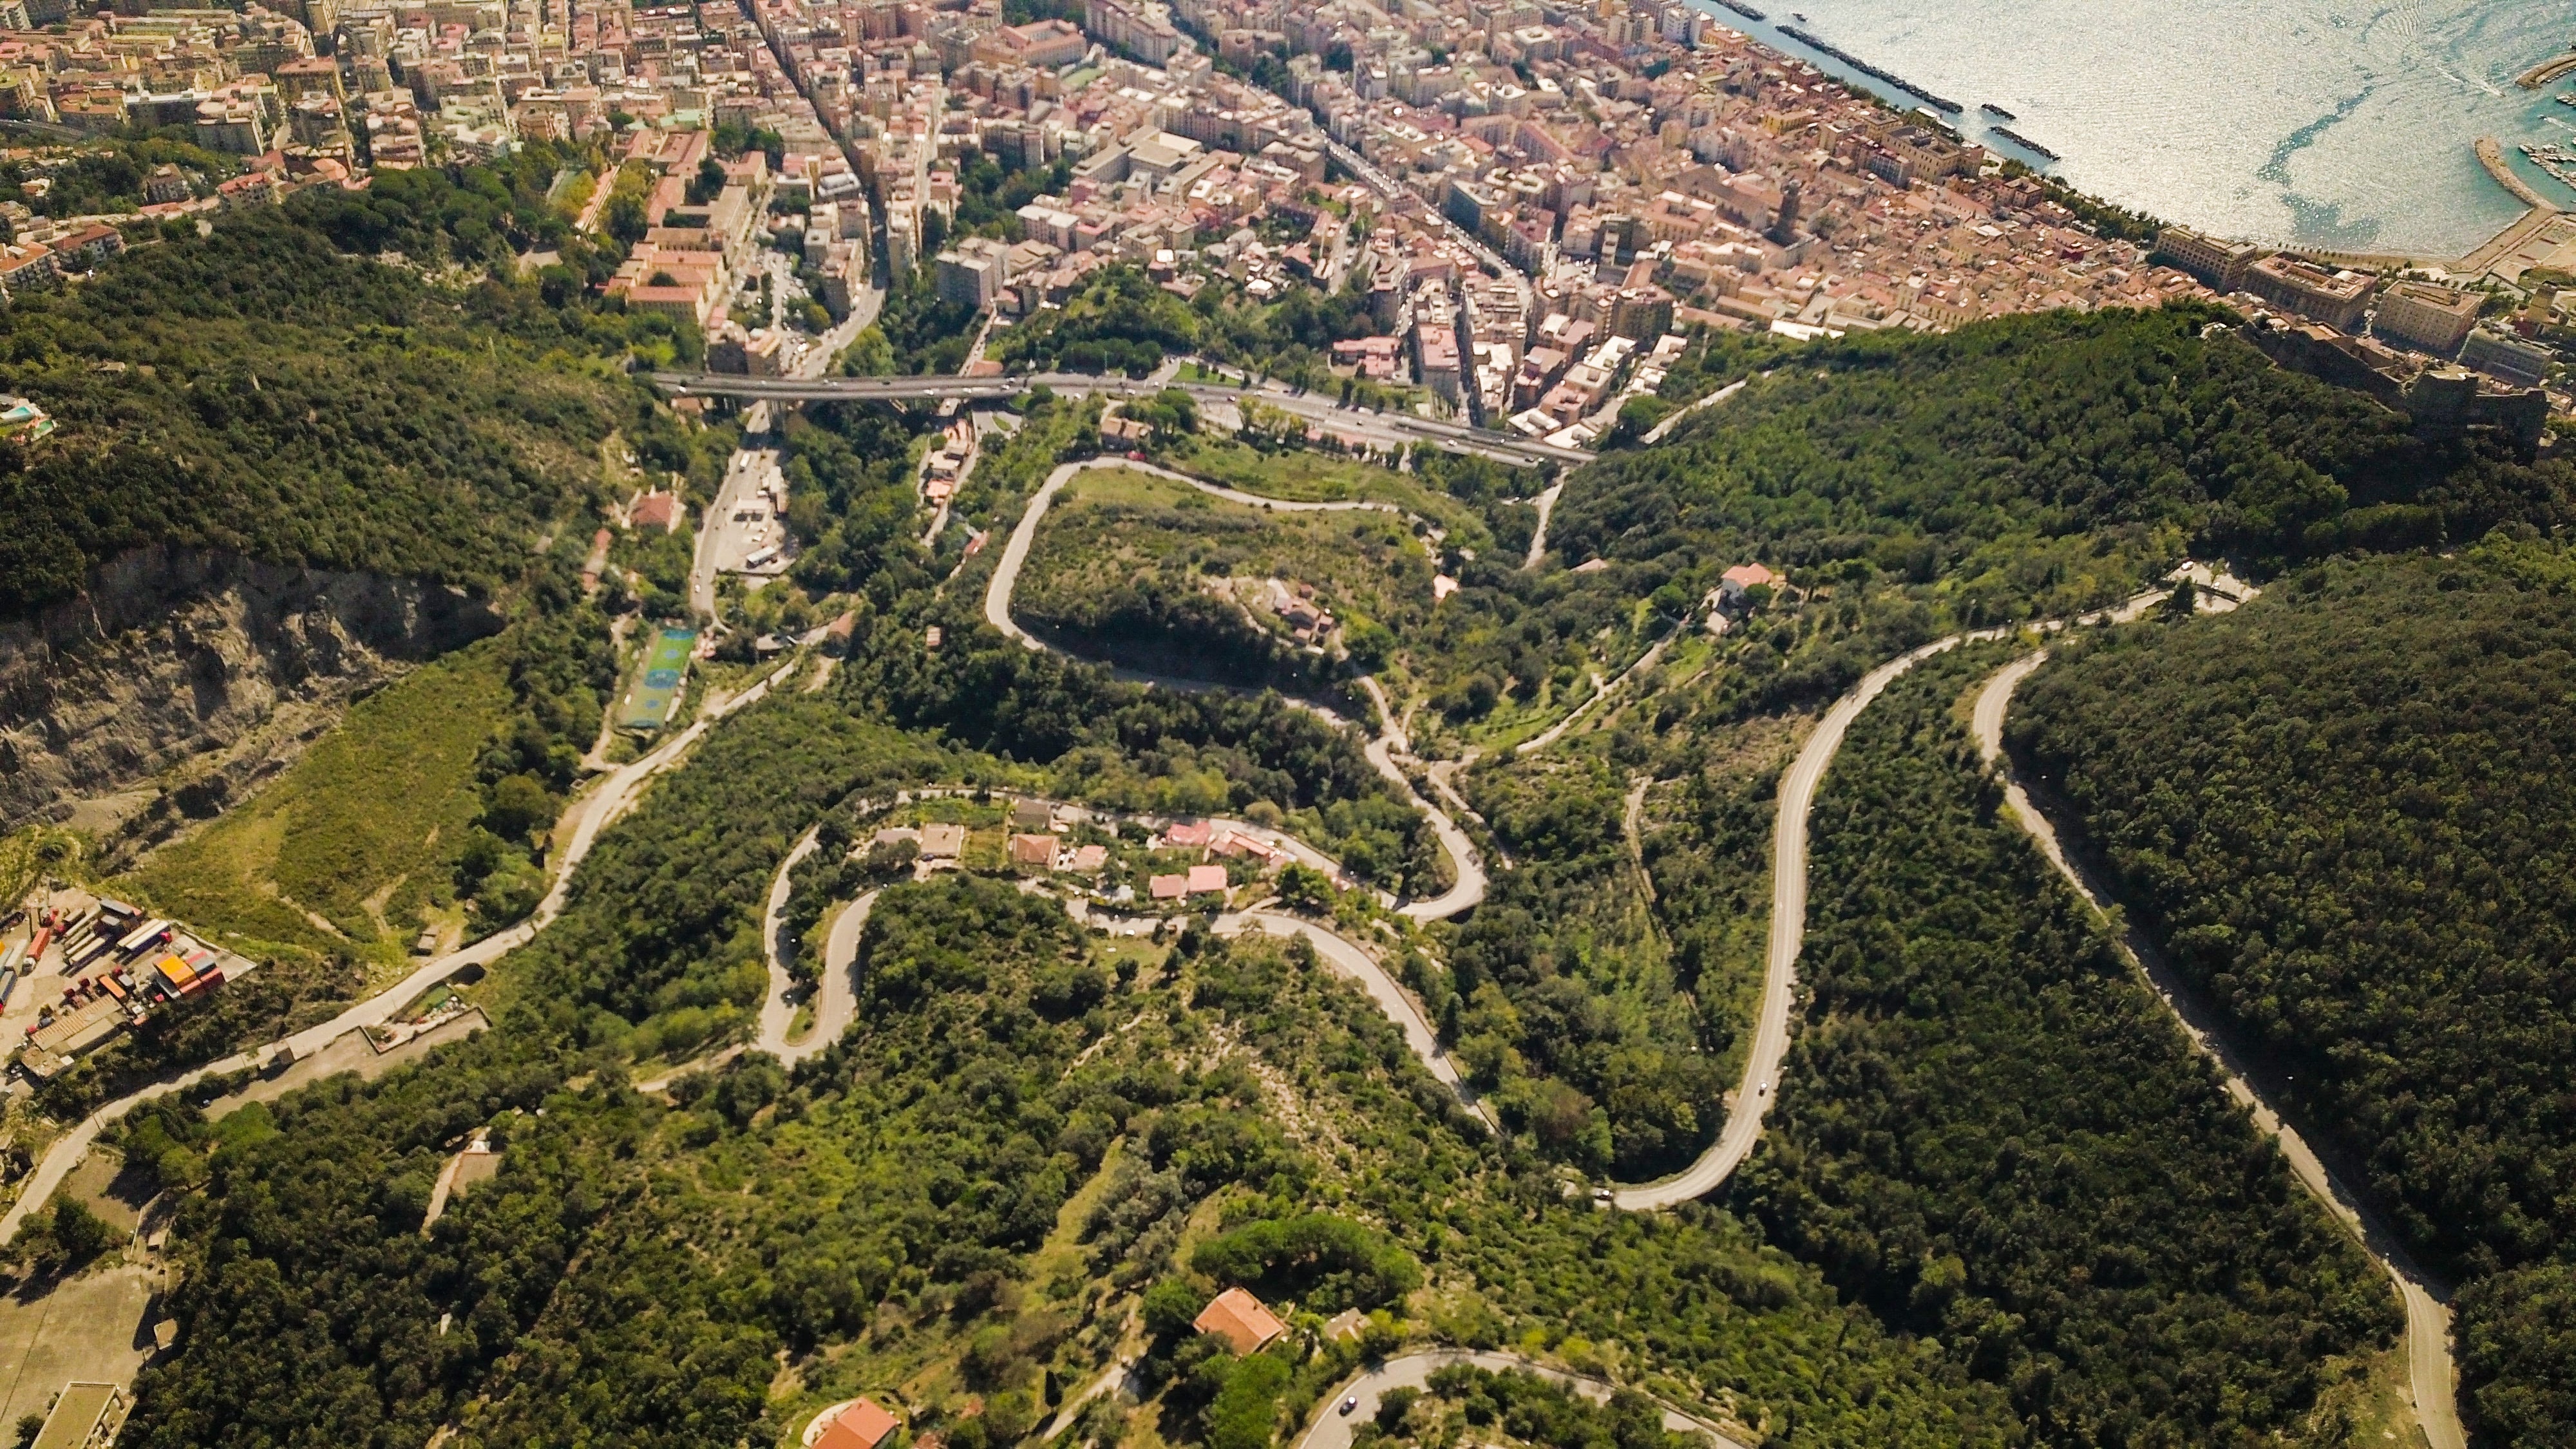 Winding roads of the Amalfi Coast